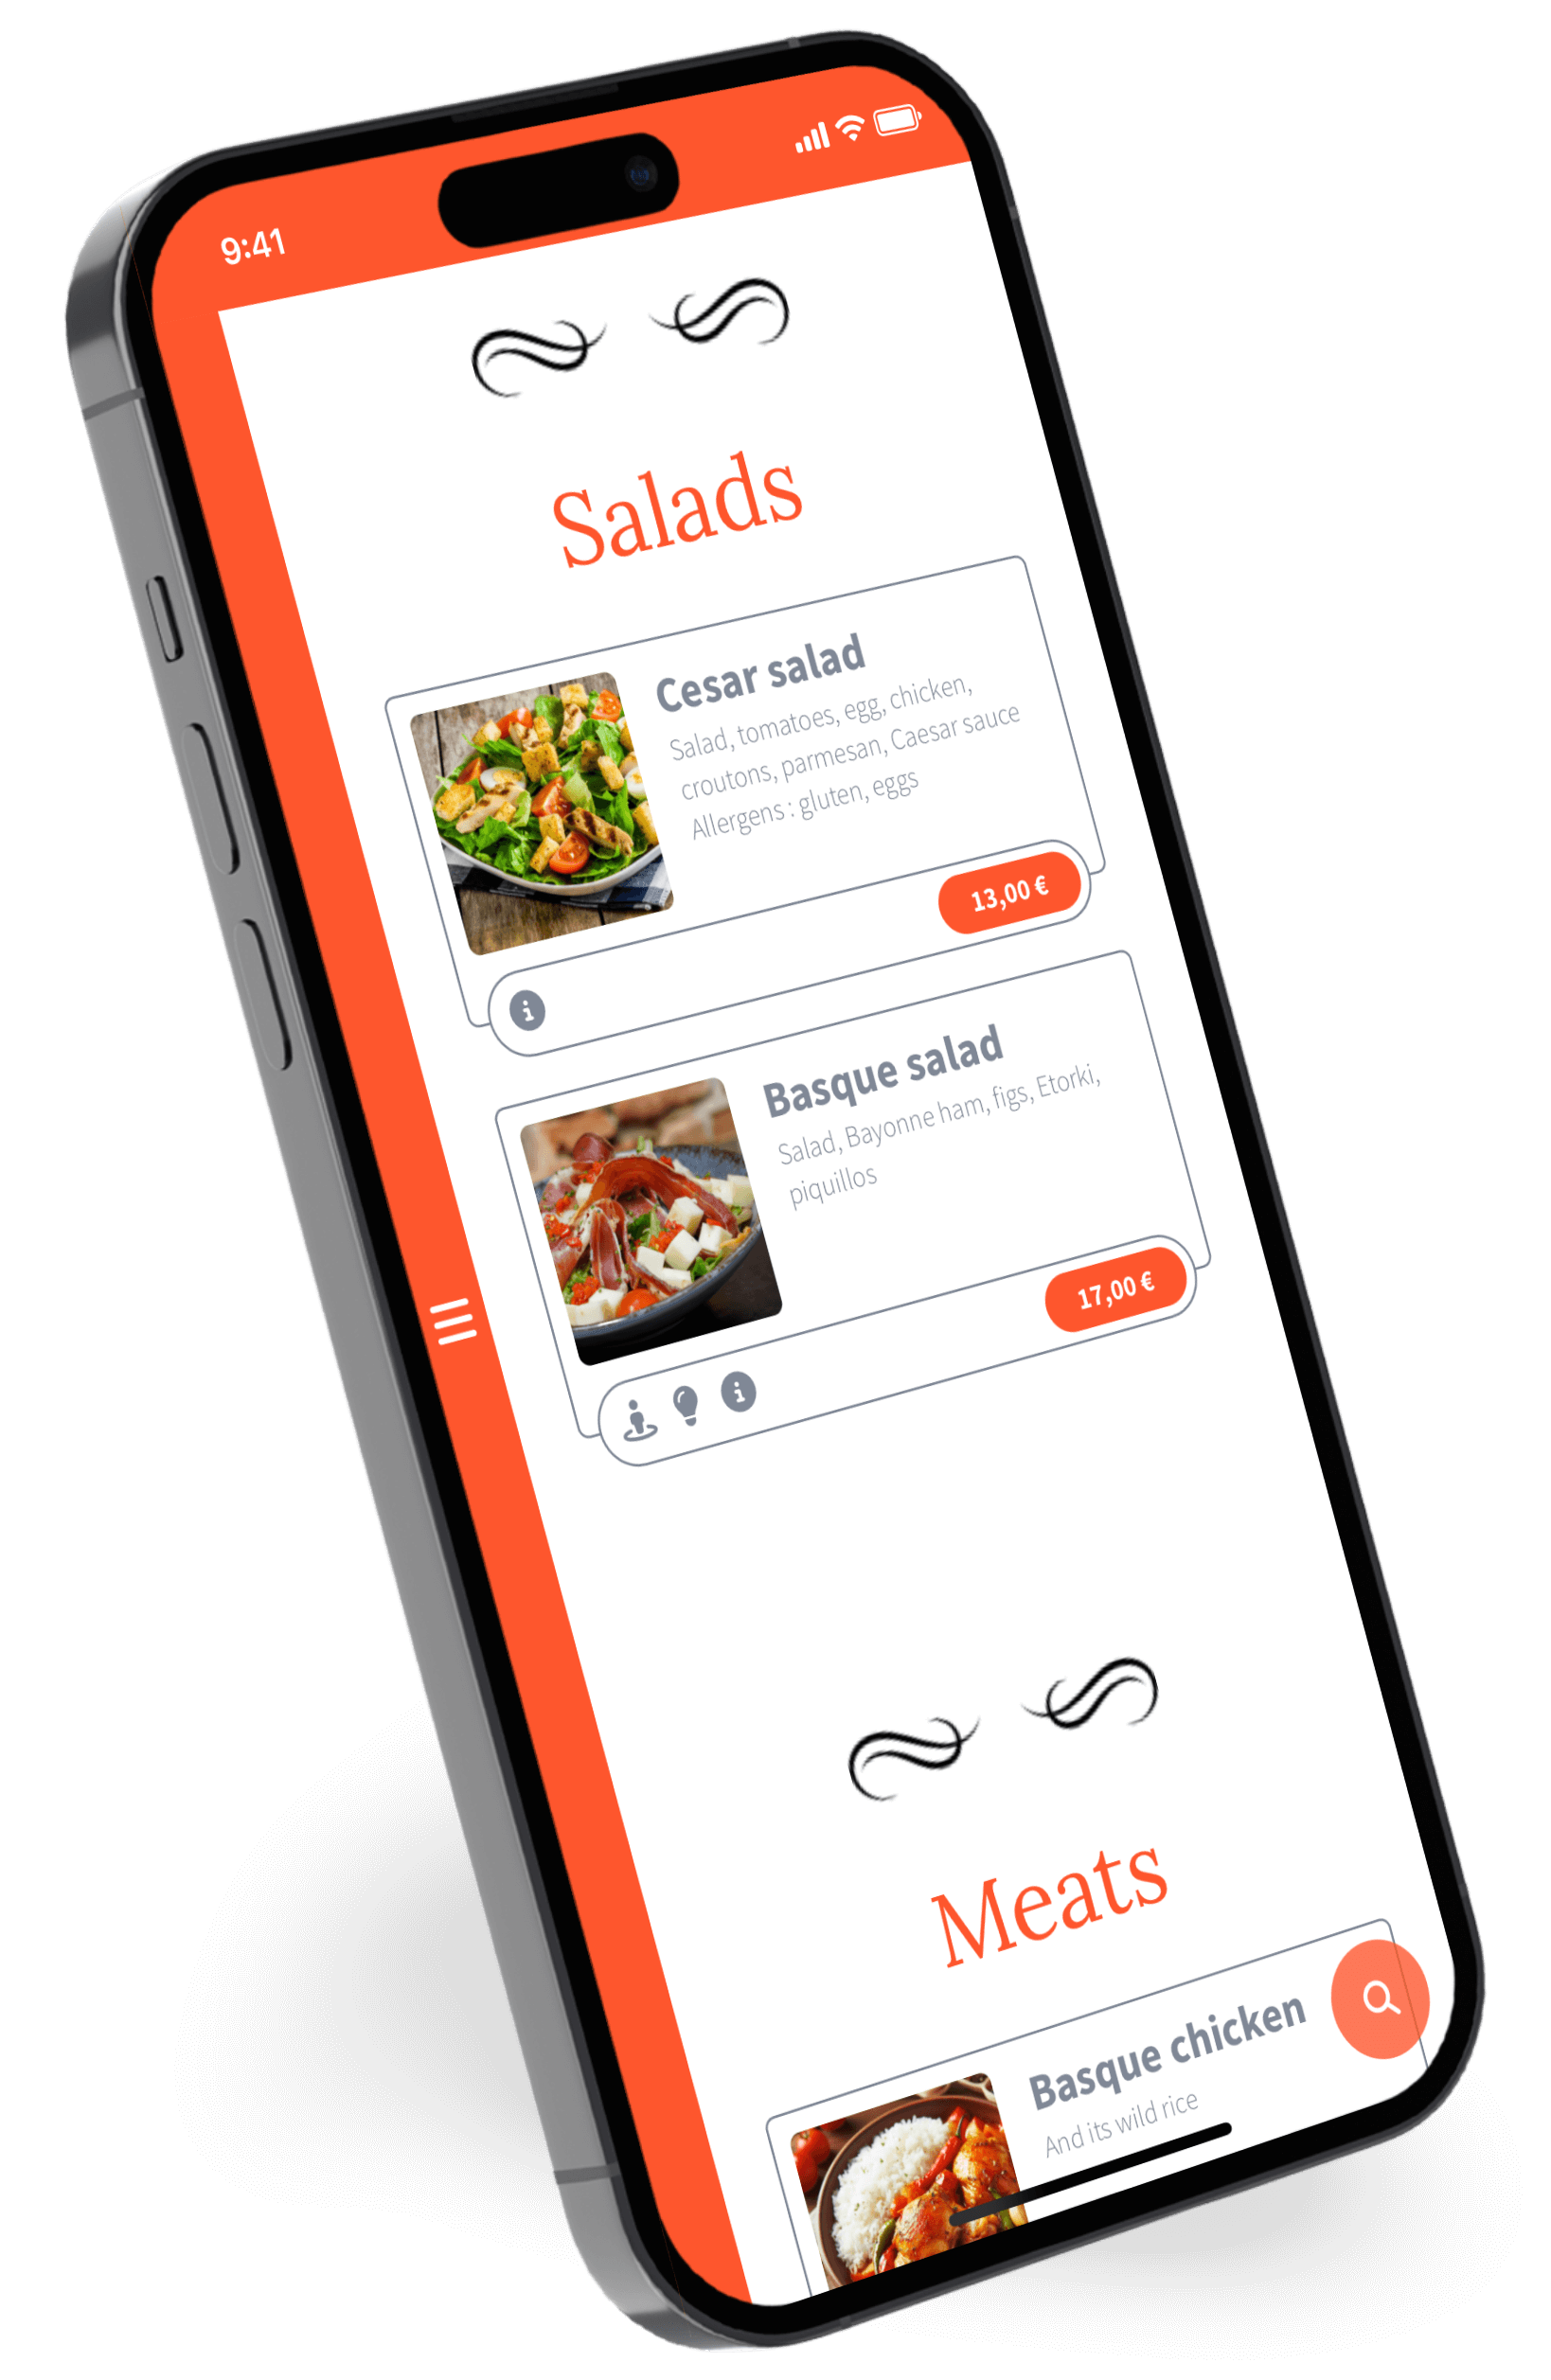 Your restaurant menu displayed in grid format thanks to Carte de Restaurant